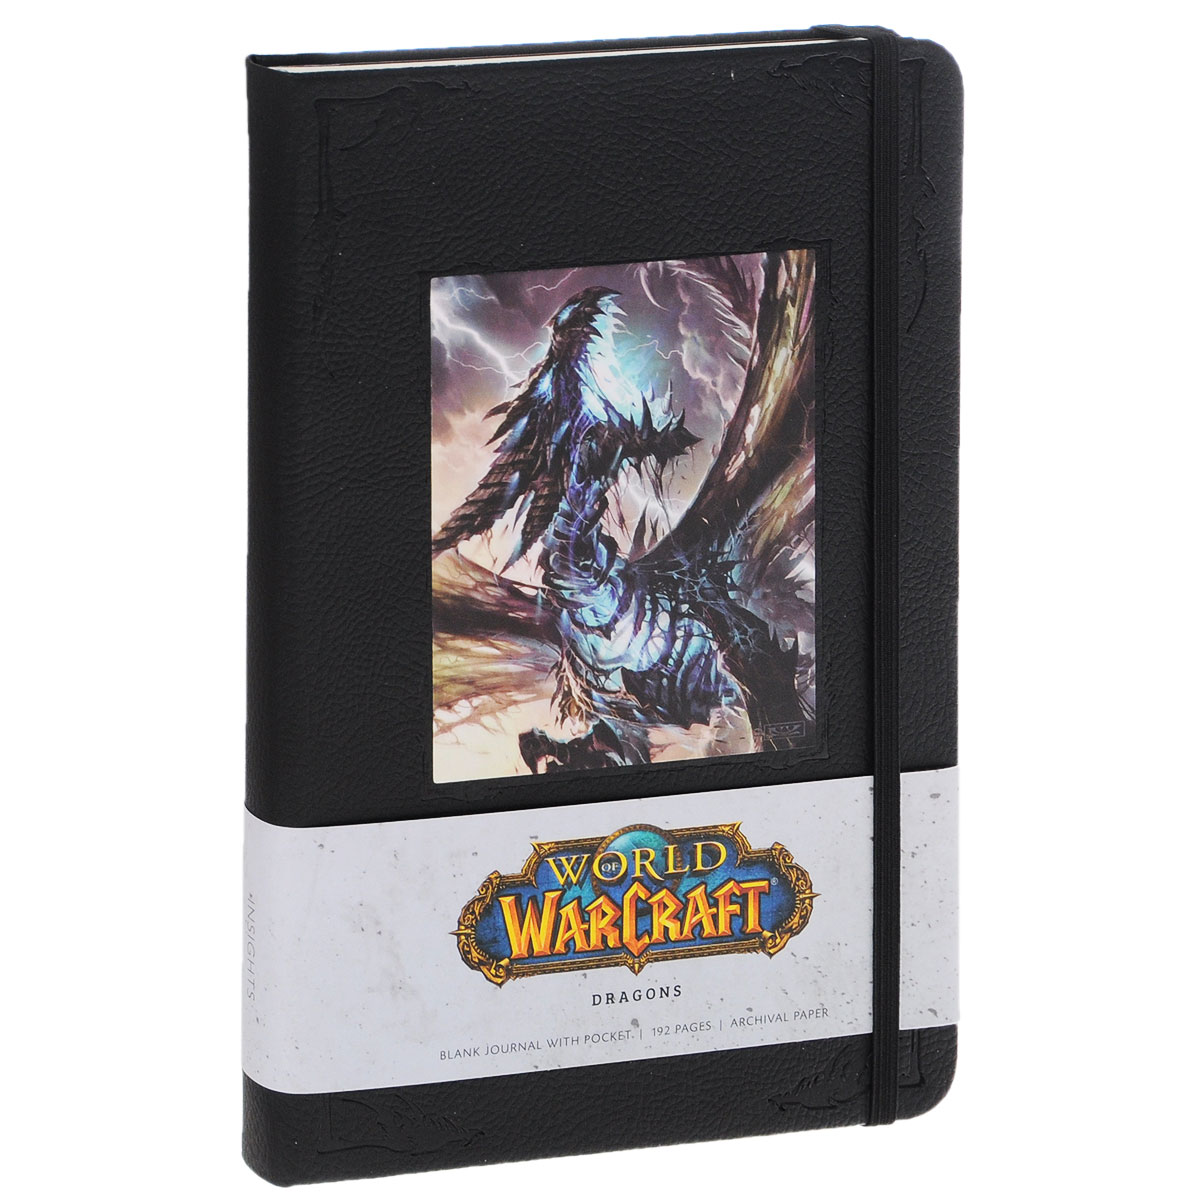 World of Warcraft Dragons Blank Journal